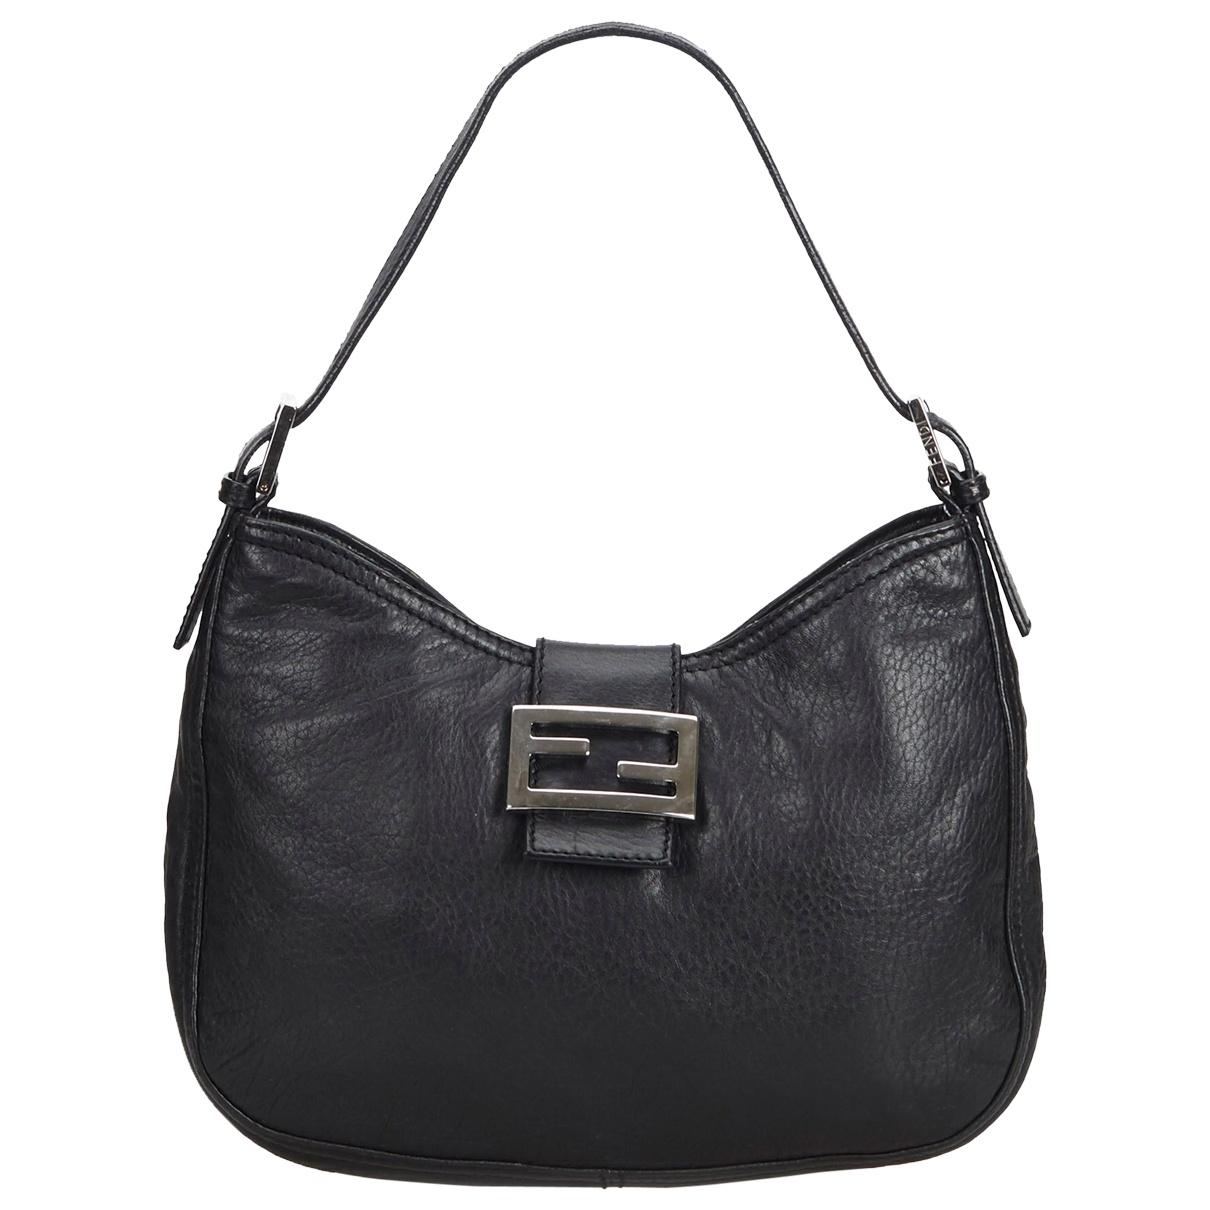 Lyst - Fendi Pre-owned Baguette Black Leather Handbags in Black